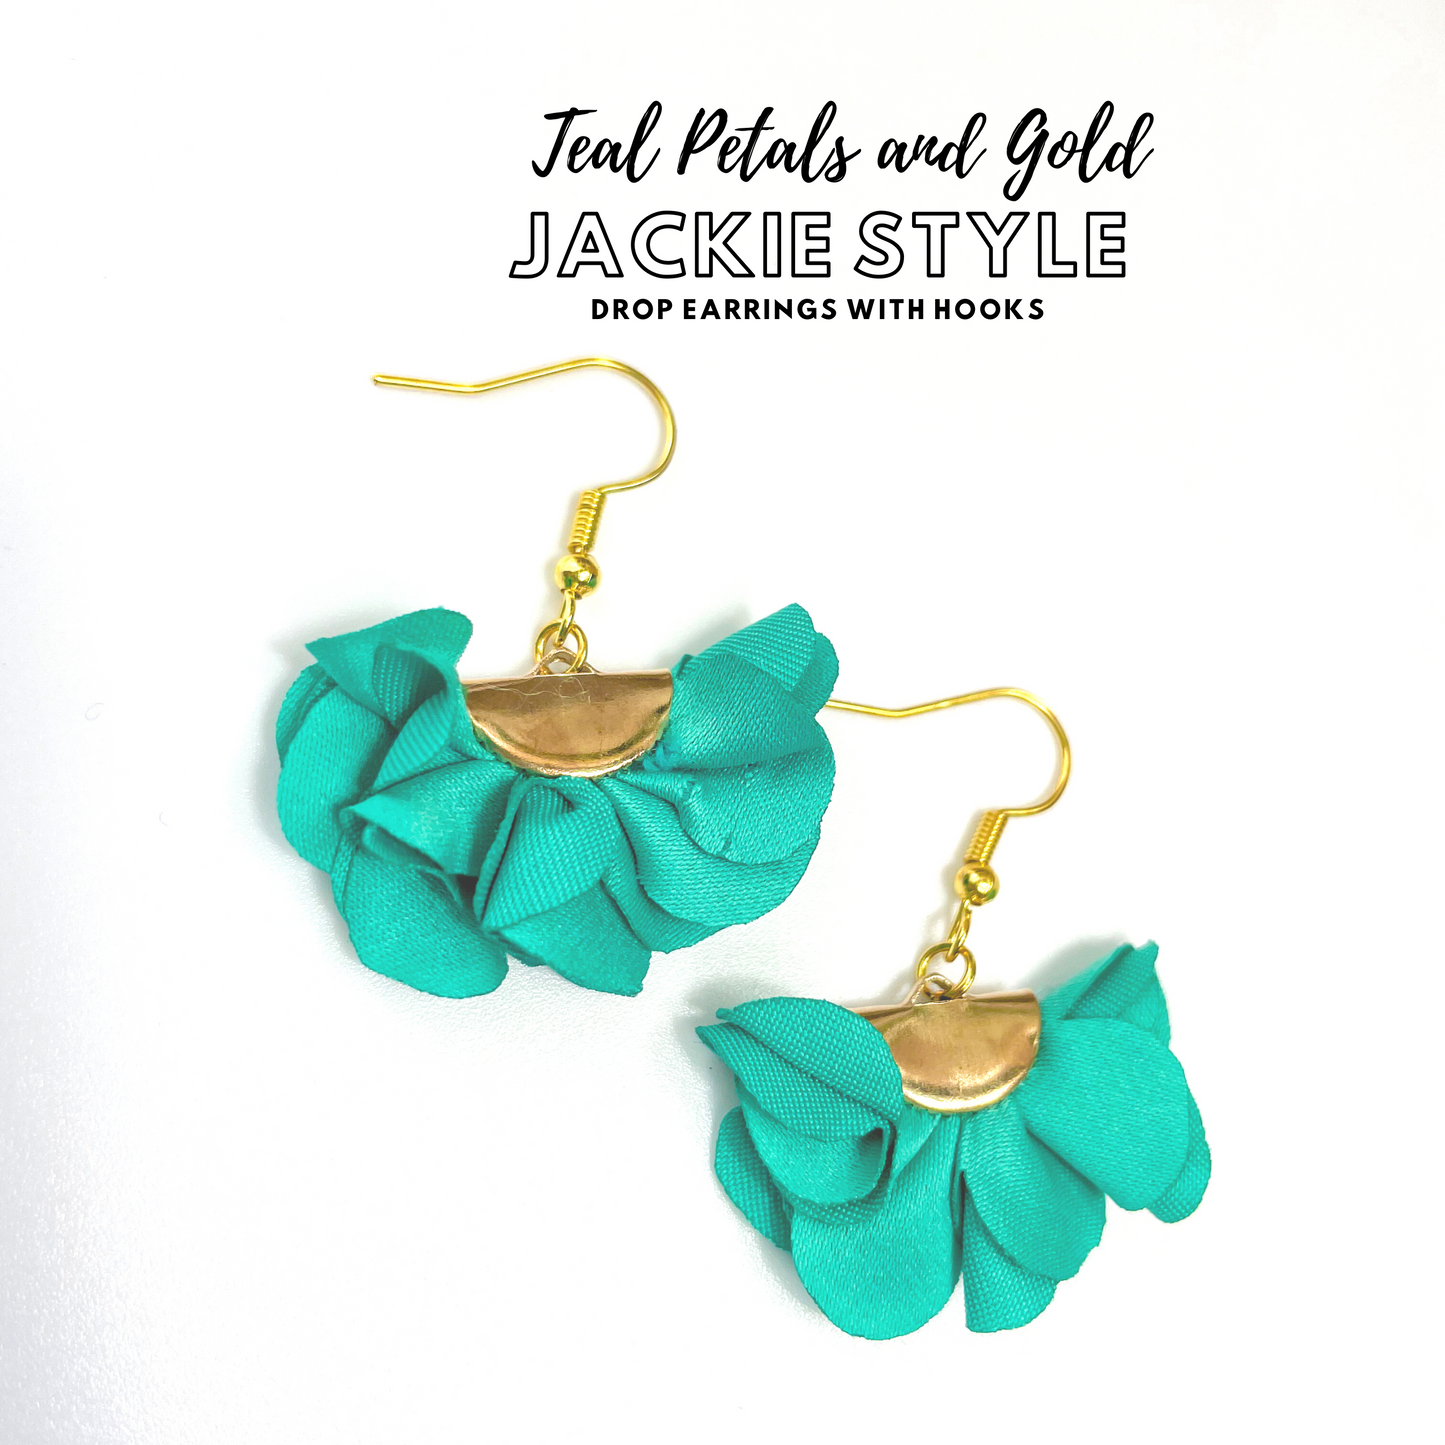 Jackie Style Earrings - Teal Petals | Dangle Earrings with Hooks